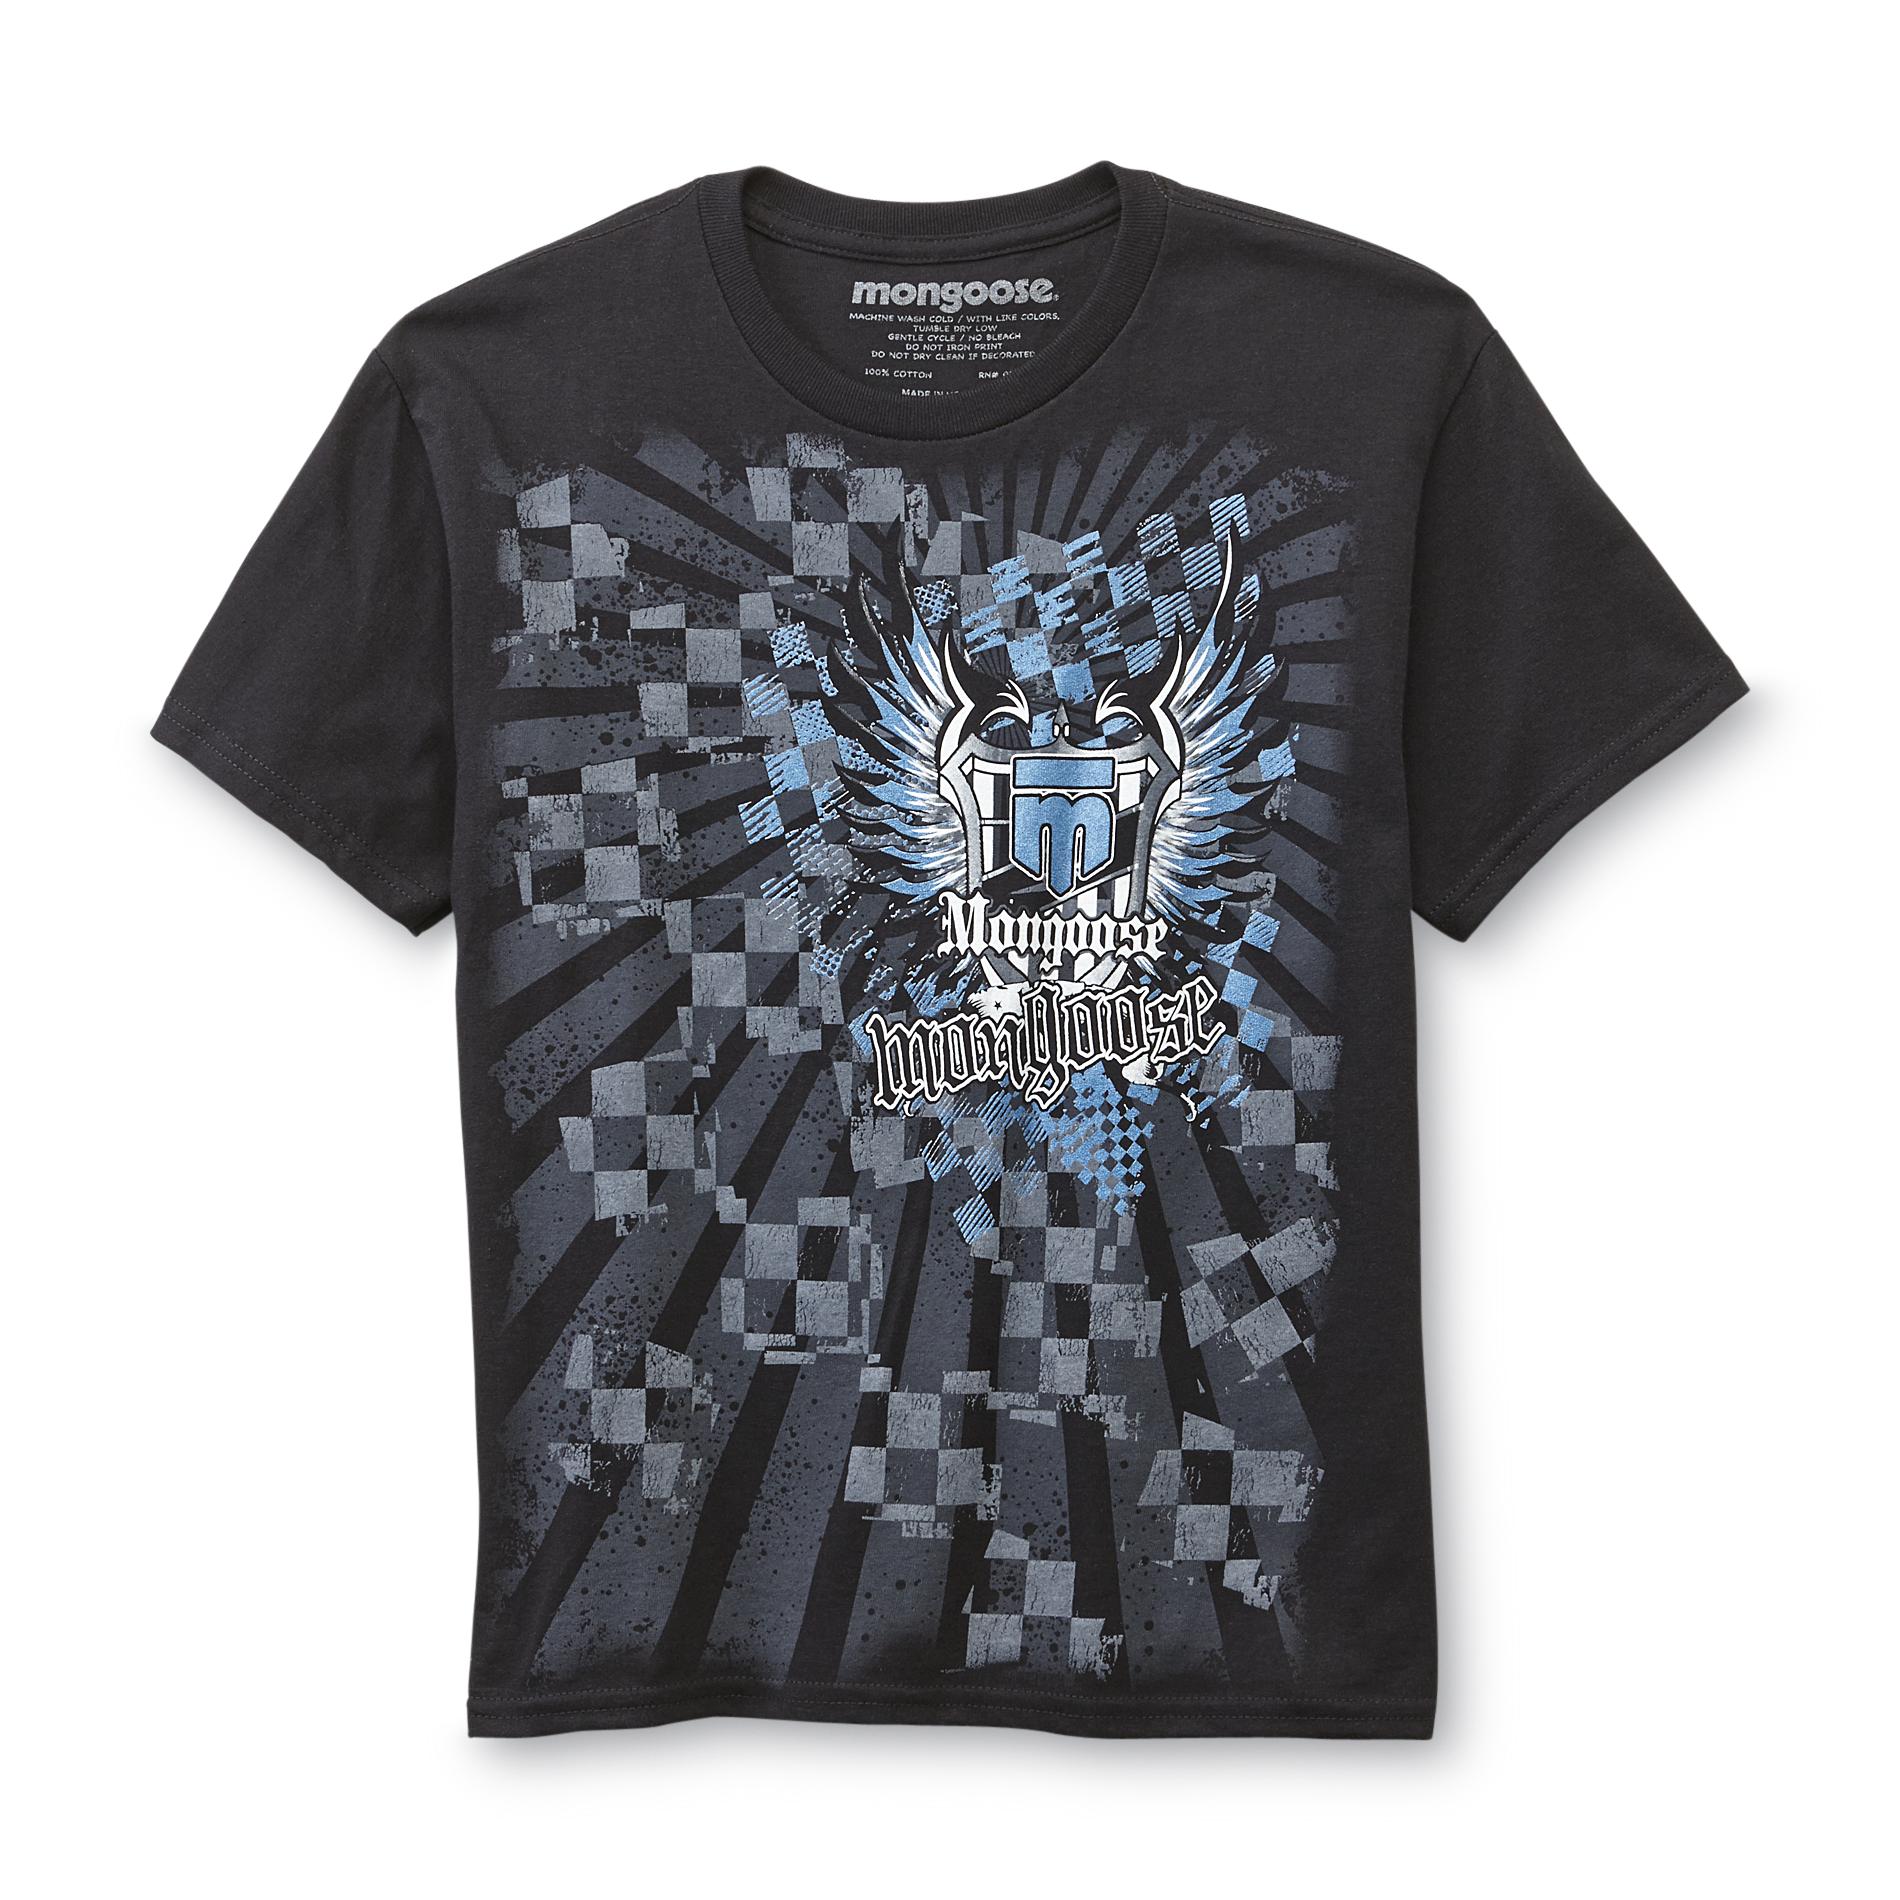 Mongoose Boy's Graphic T-Shirt - Geometric Checkered